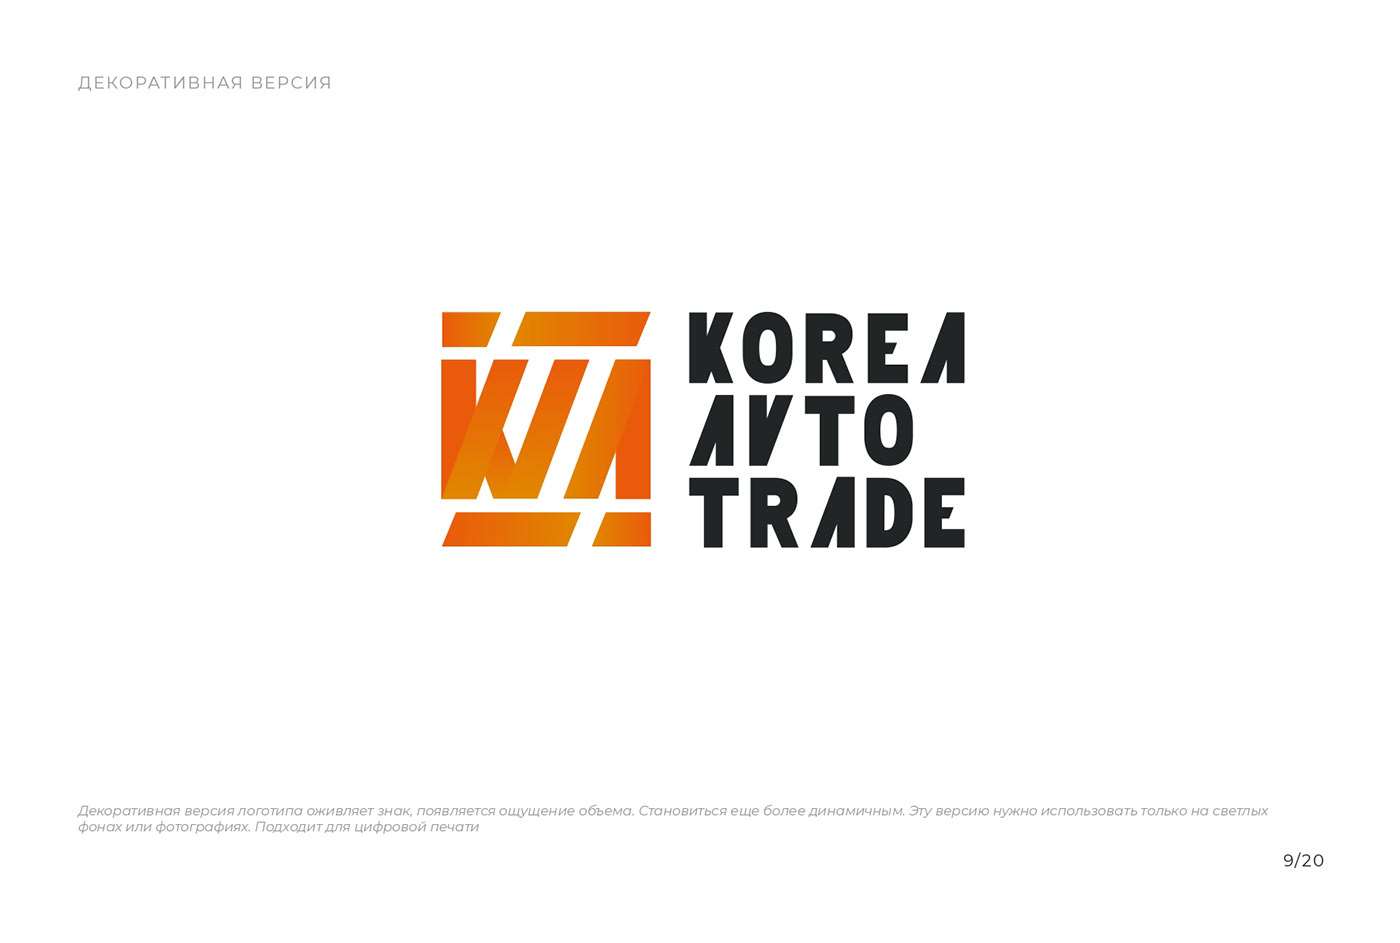 Логотип. Korea Avto Trade Компания по продаже Авто.
Декоративный логотип

